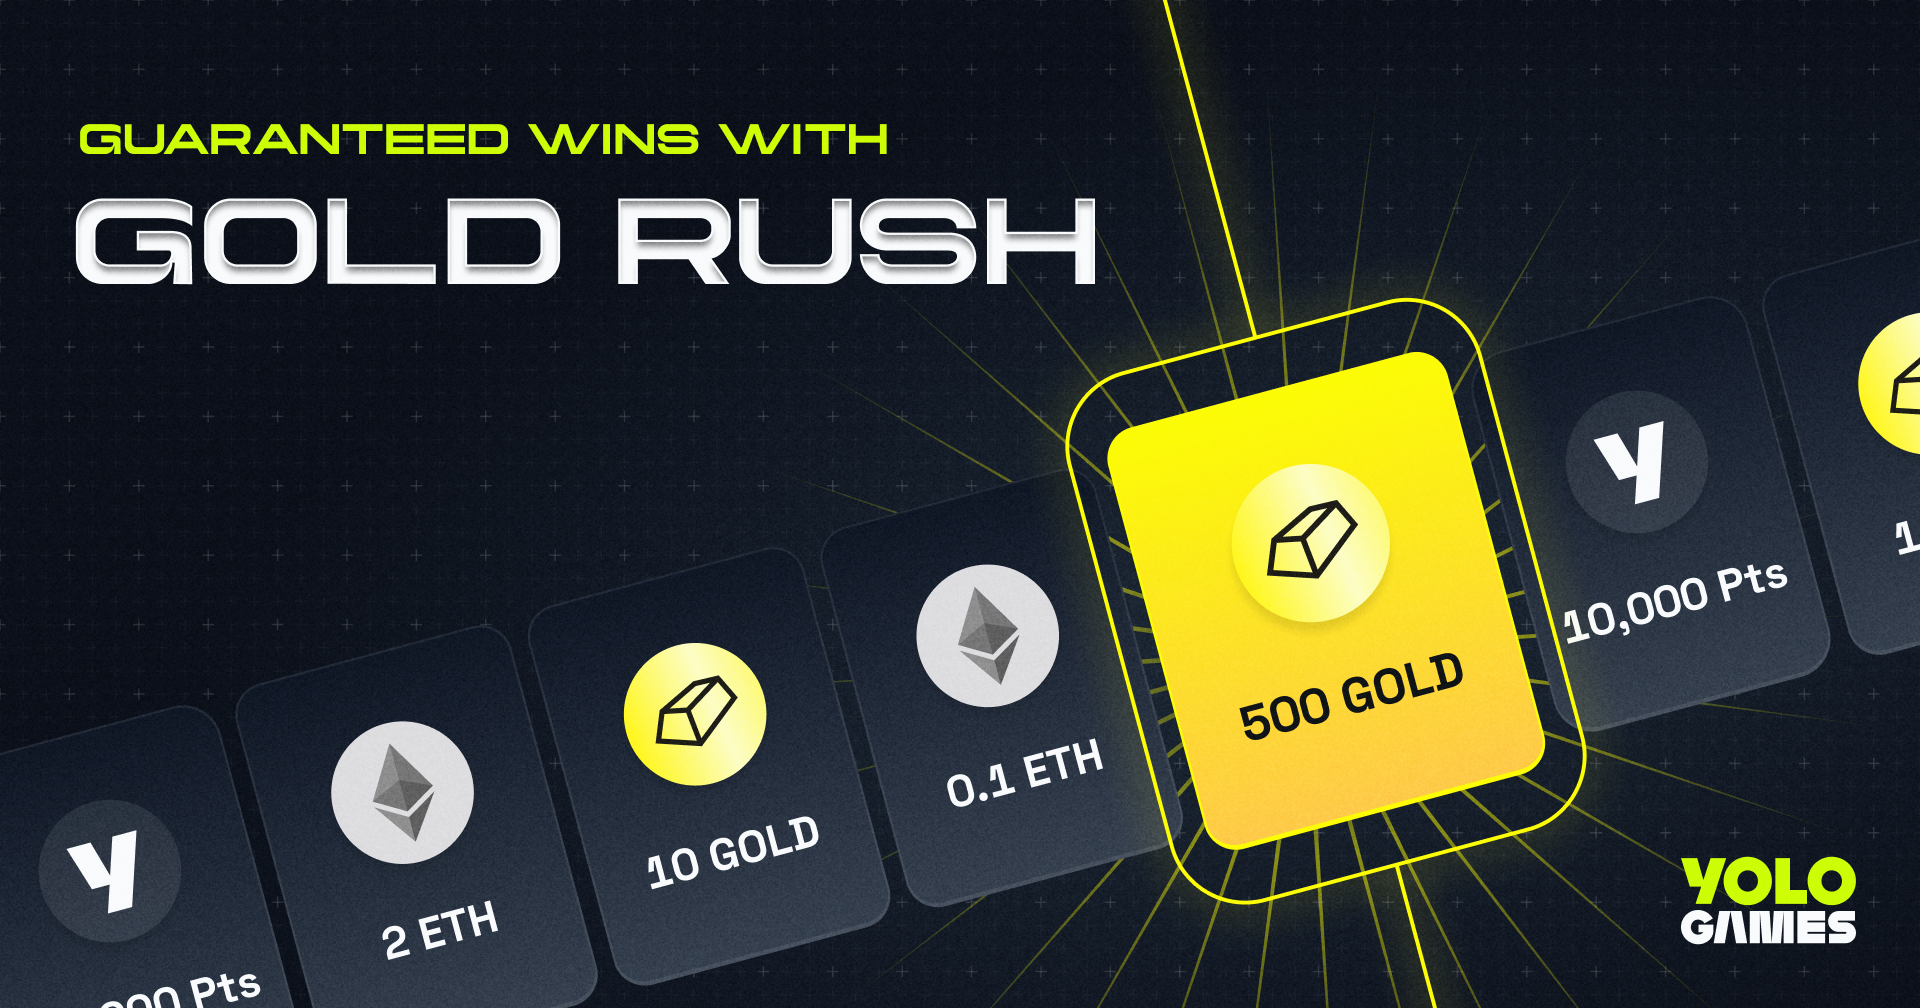 Introducing GOLD RUSH